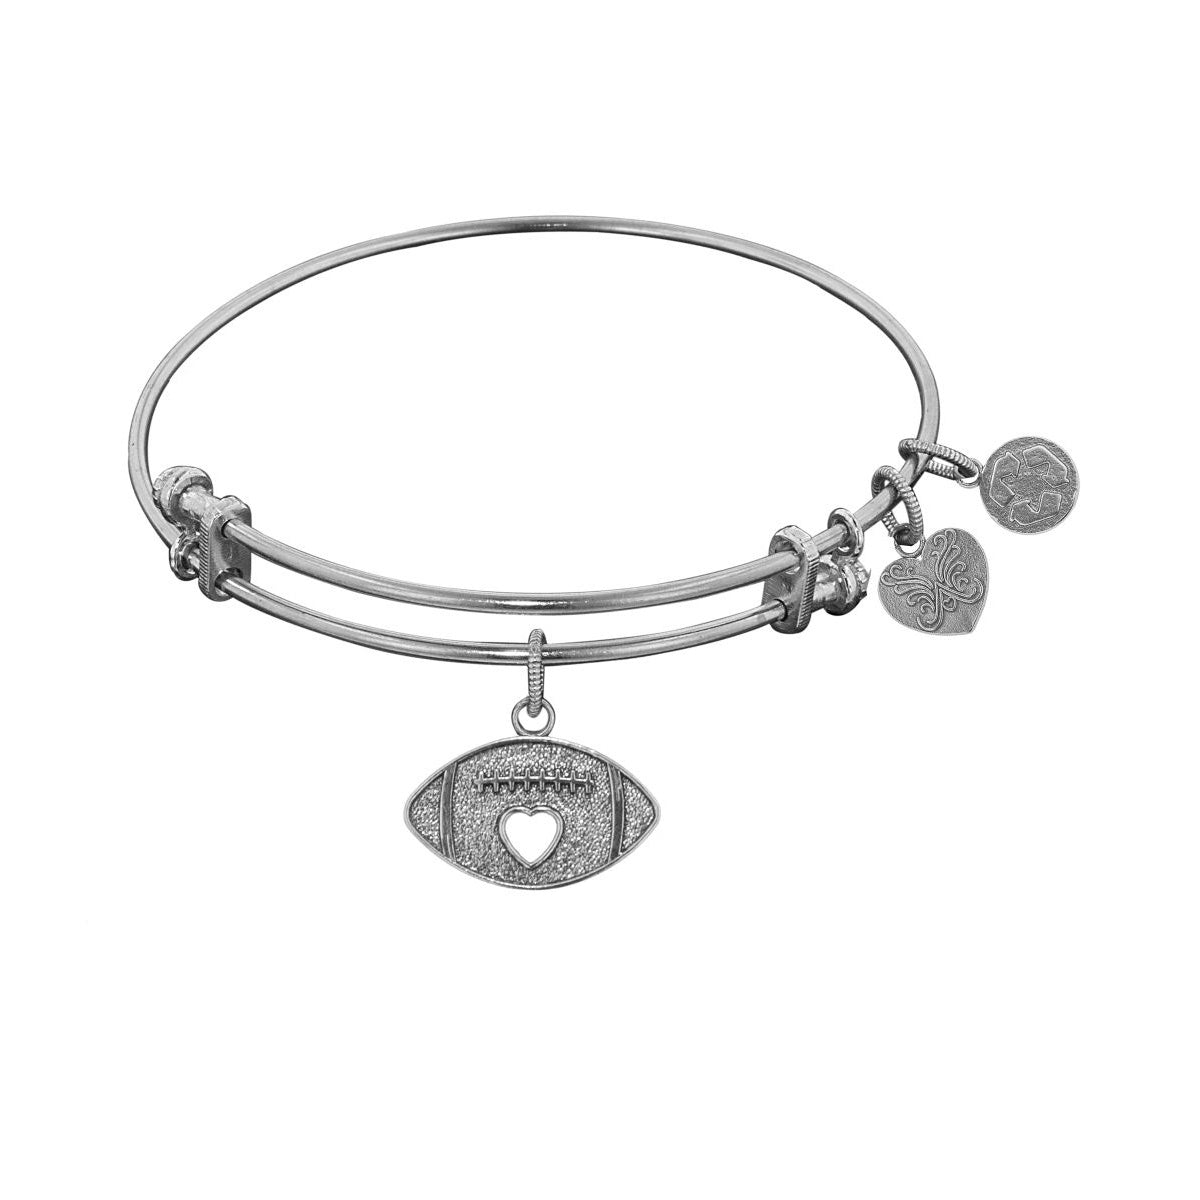 Stipple Finish Brass Football Angelica Bangle Bracelet, 7.25" fine designer jewelry for men and women